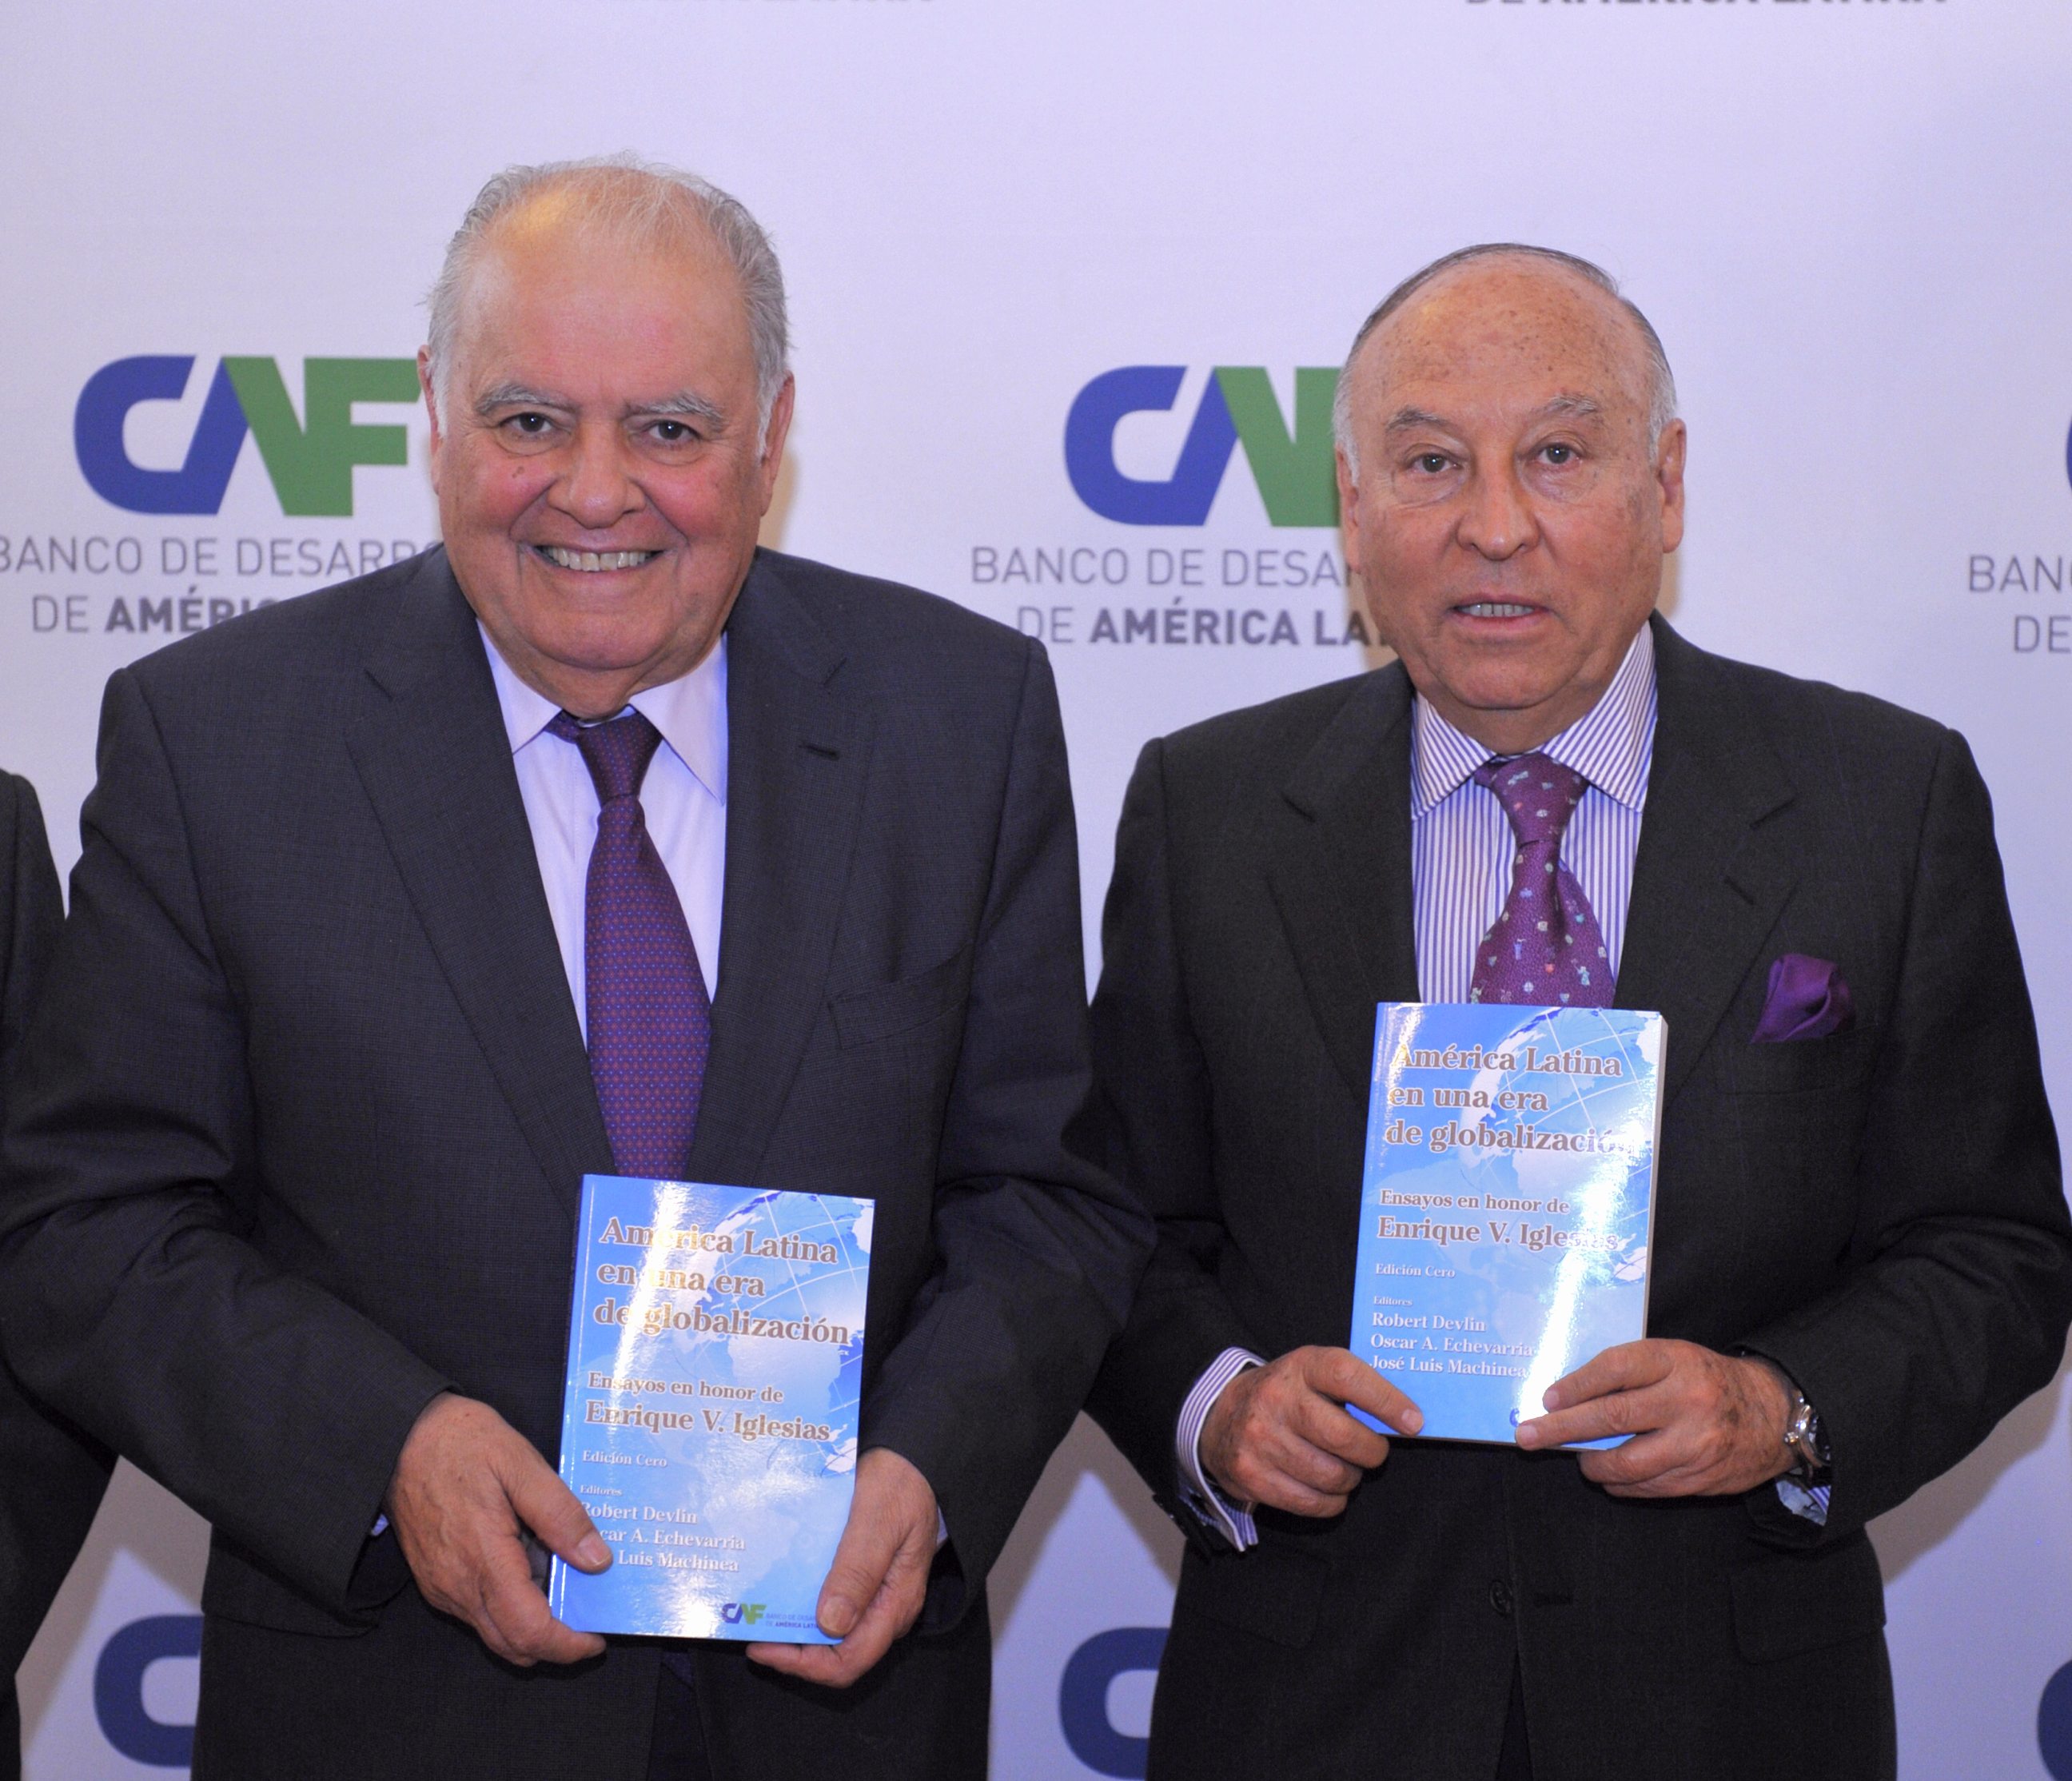 CAF promueve un libro-homenaje a Enrique V. Iglesias